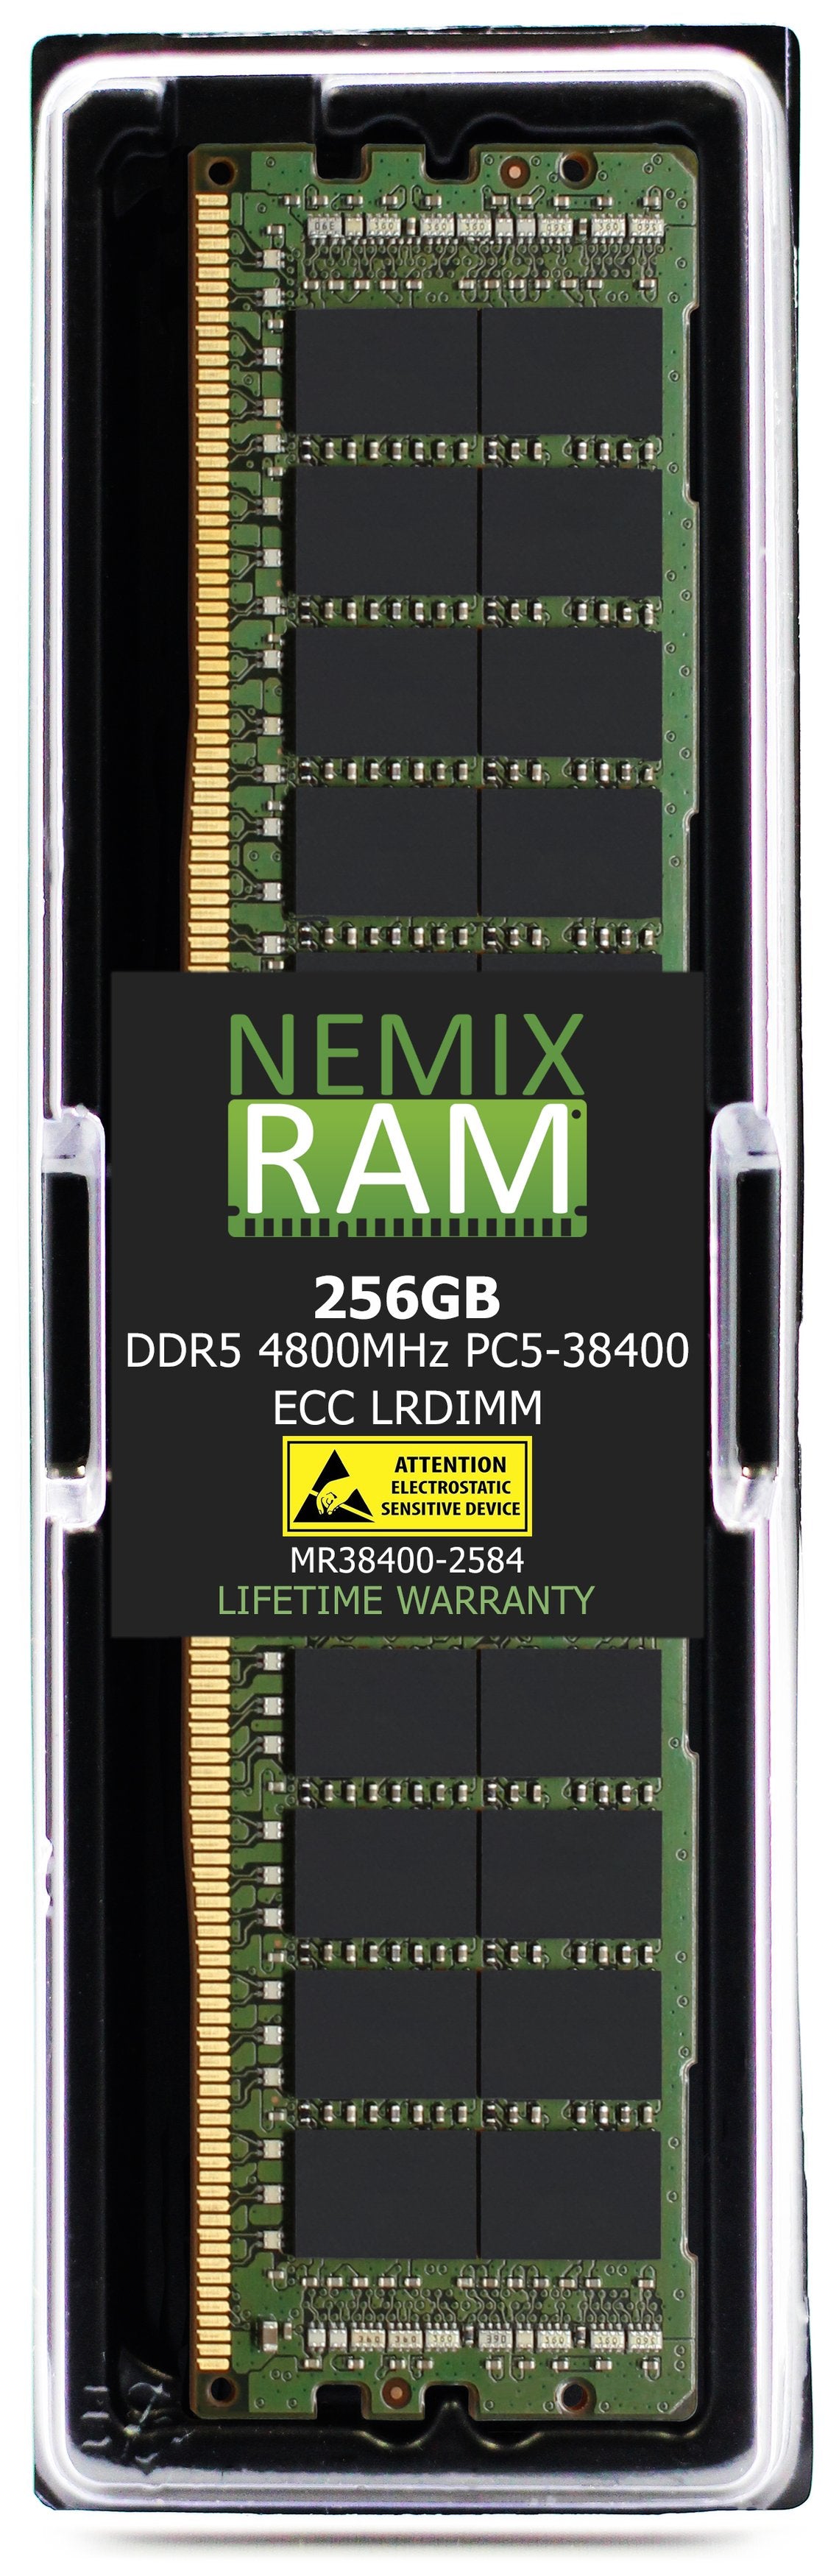 NEMIX RAM 256GB DDR5 4800MHz PC5-38400 ECC RDIMM Compatible with Hynix HMCT14MEERA154N